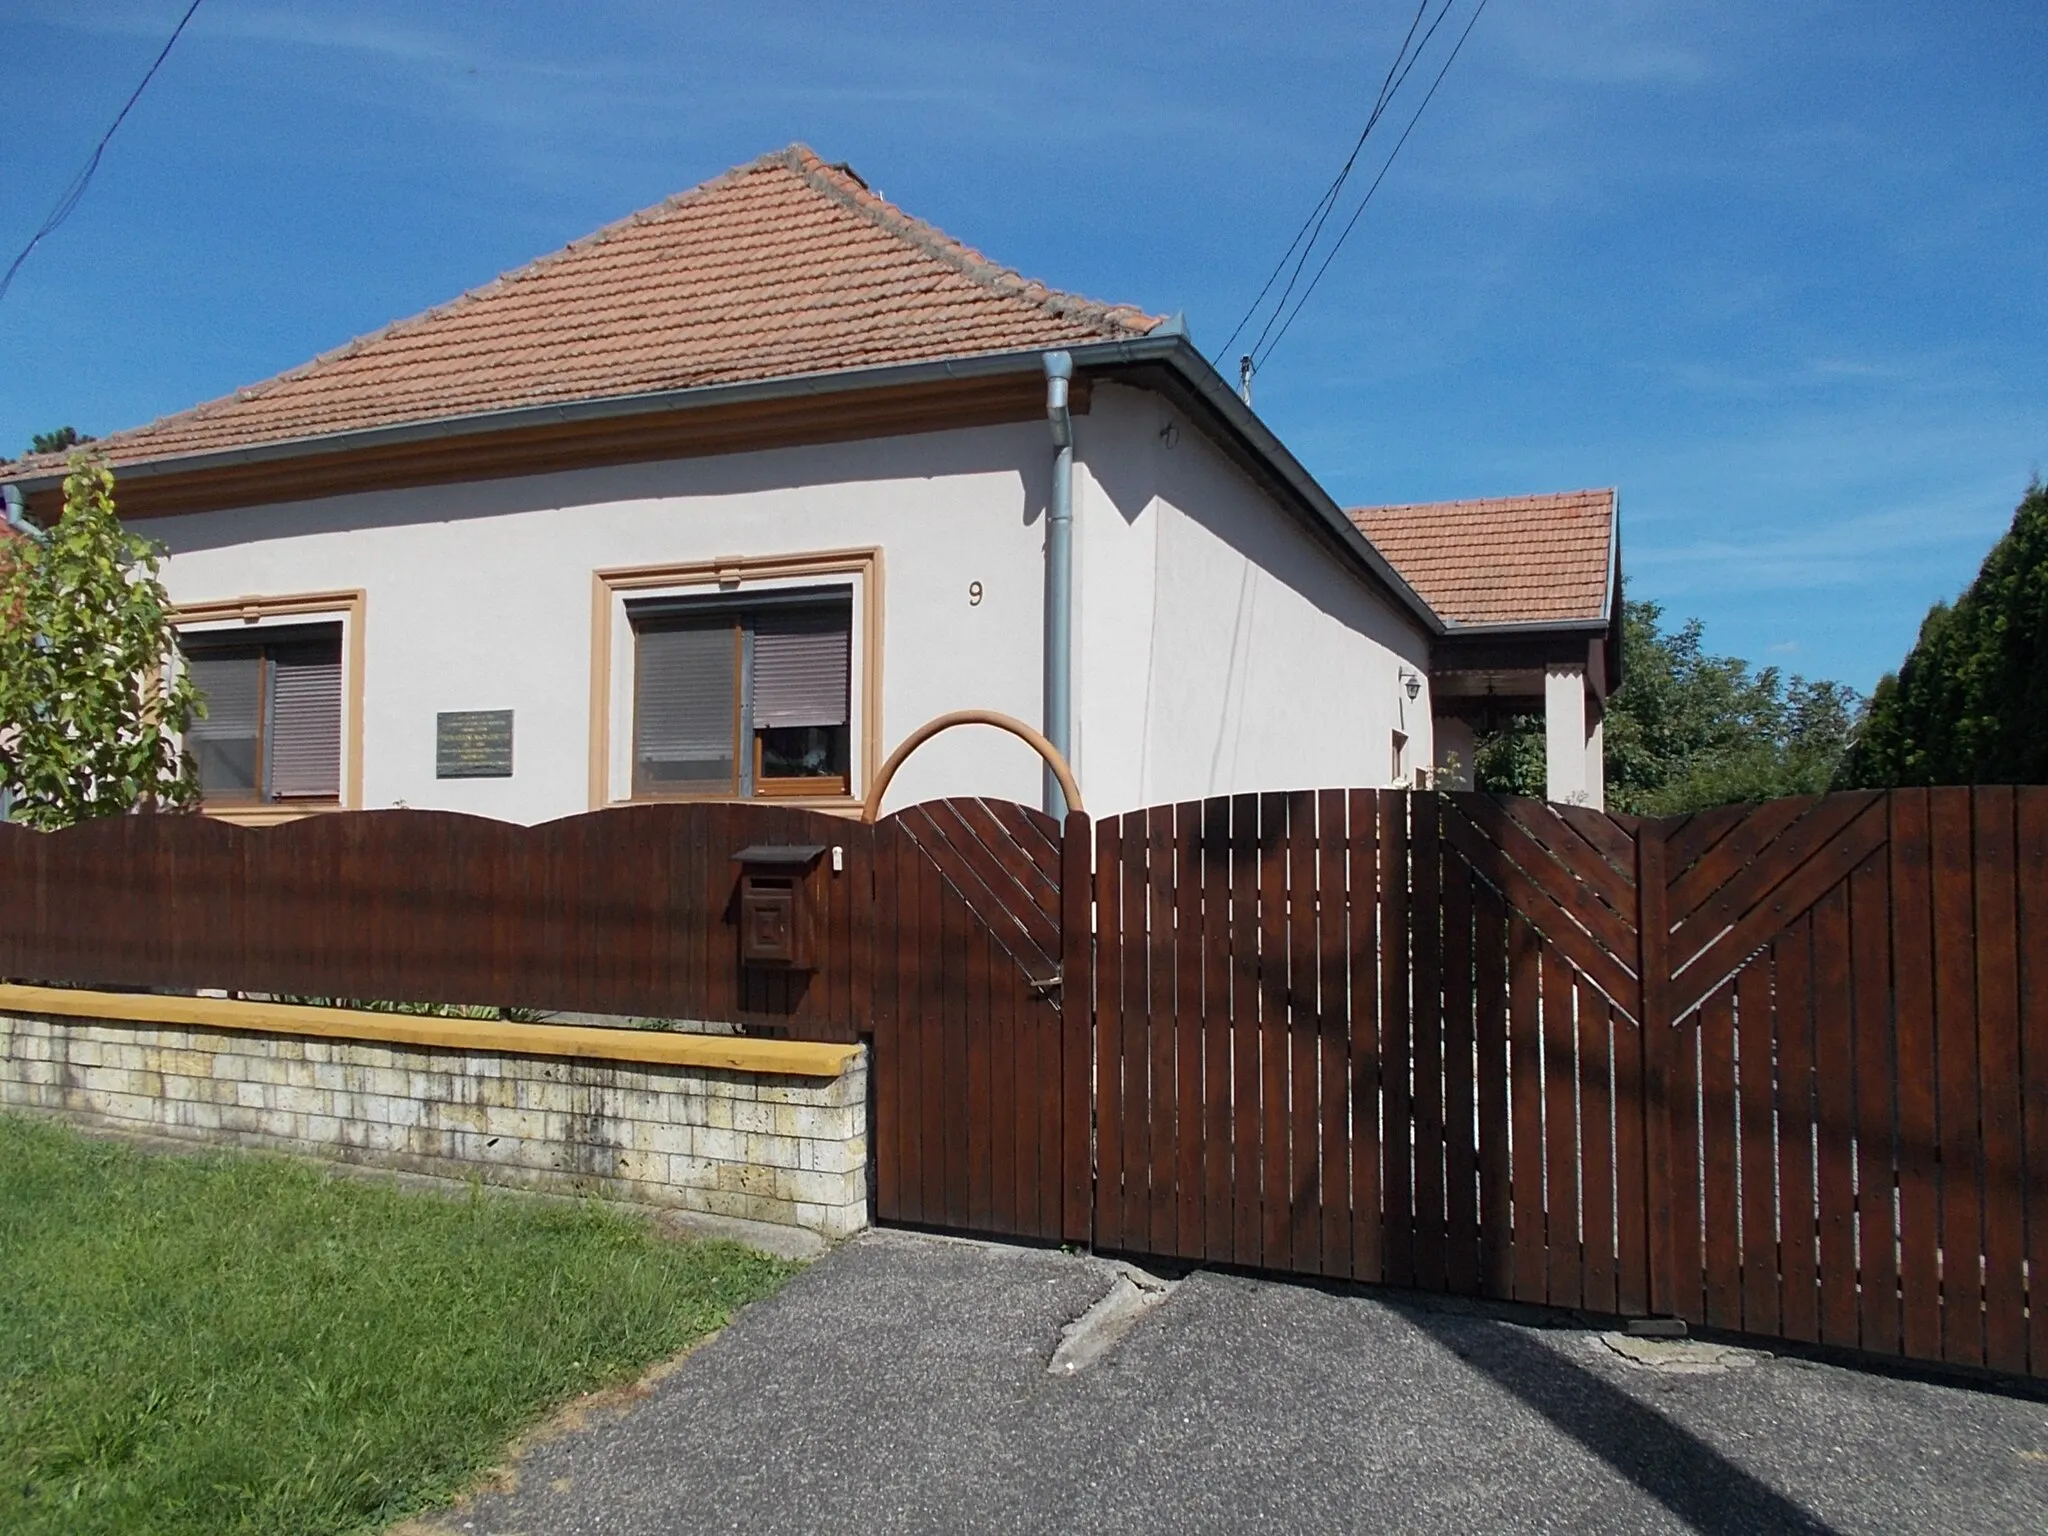 Photo showing: : House with Gusztáv Nagy here-lived-plaque - 9 Szemere Street, Sárospatak, Borsod-Abaúj-Zemplén County, Hungary.